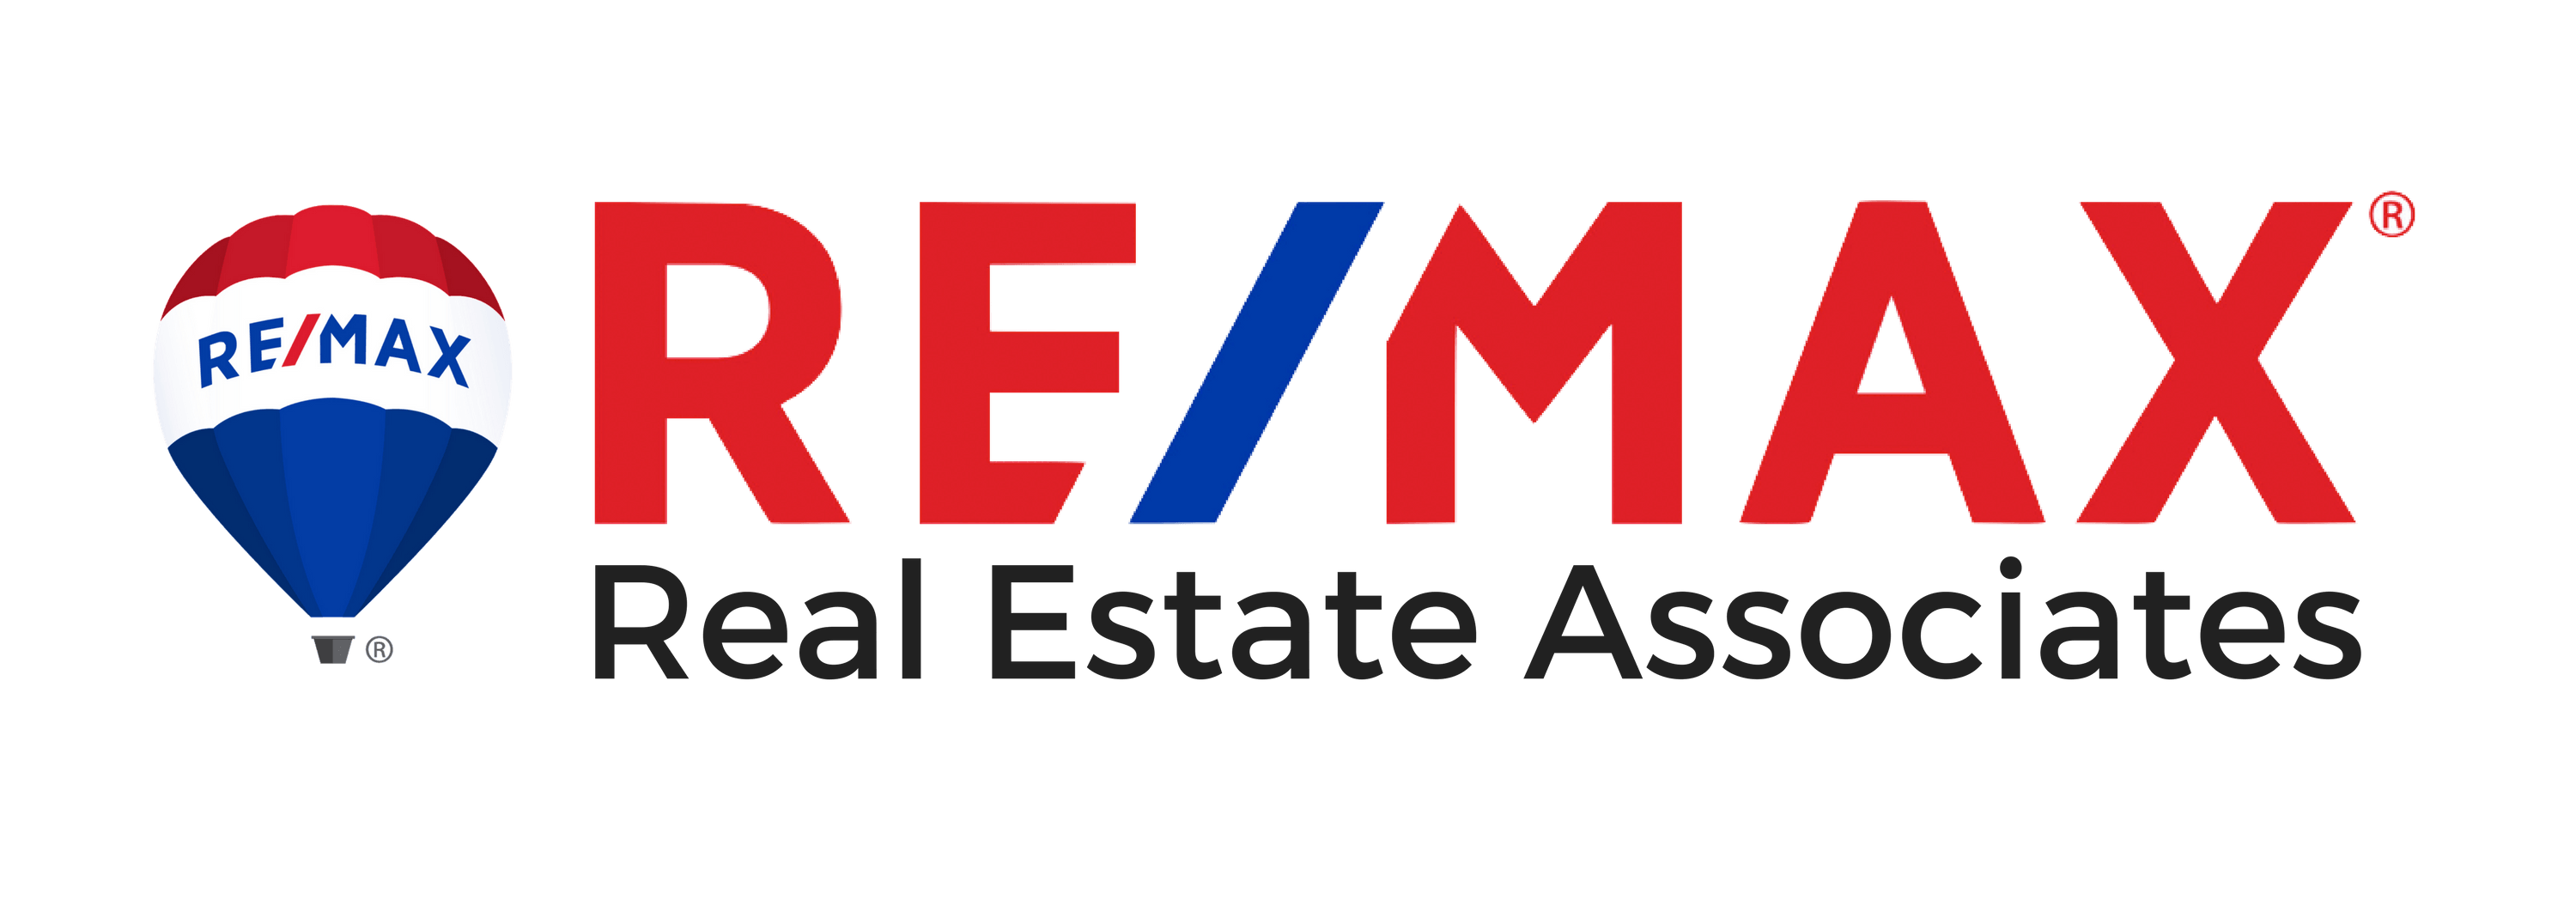 RE/MAX Logo - Brand Assets - RE/MAX Real Estate Associates